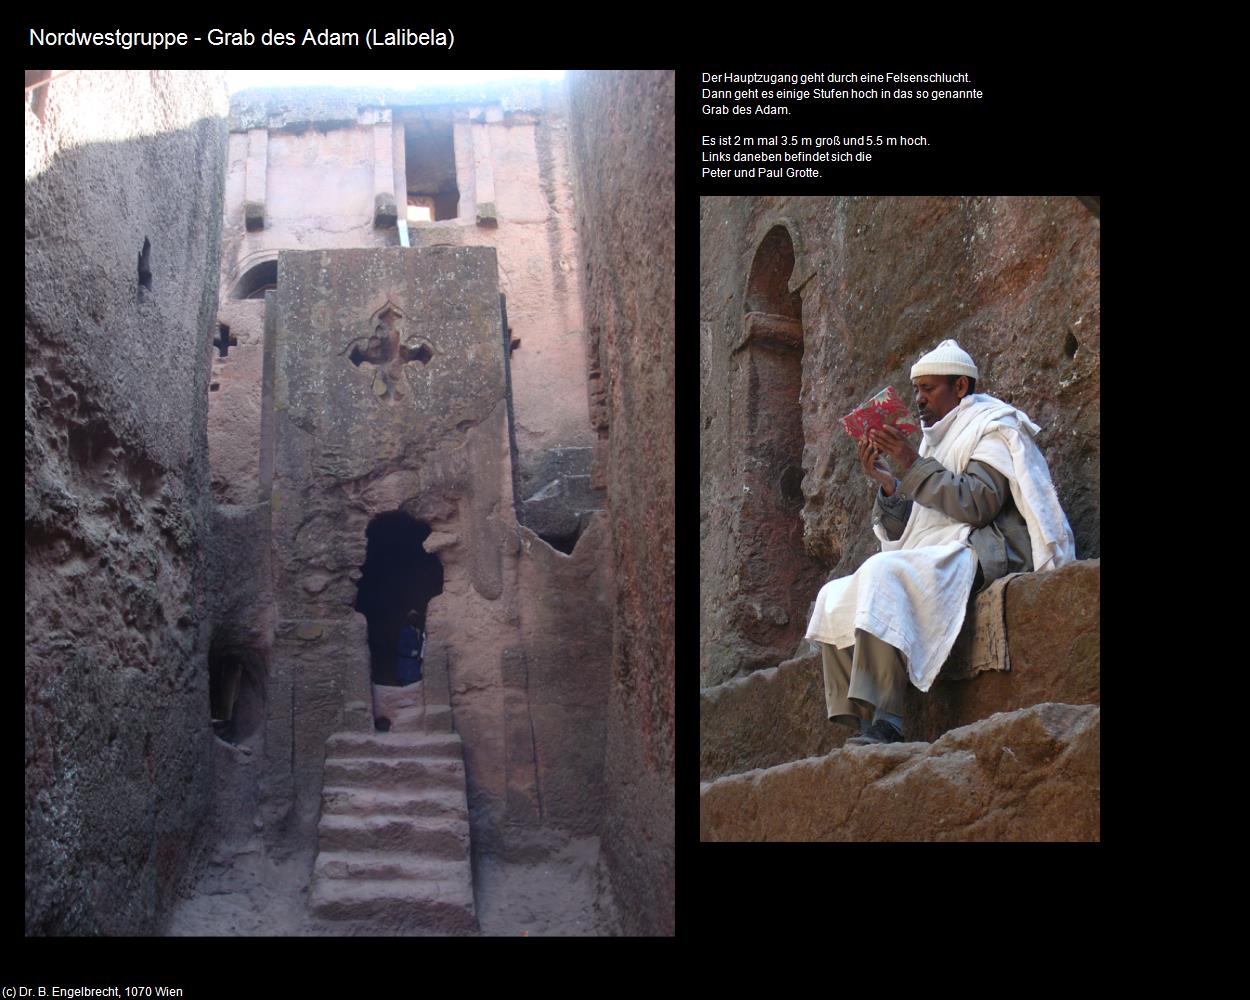 Grab des Adam  (Lalibela) in Äthiopien